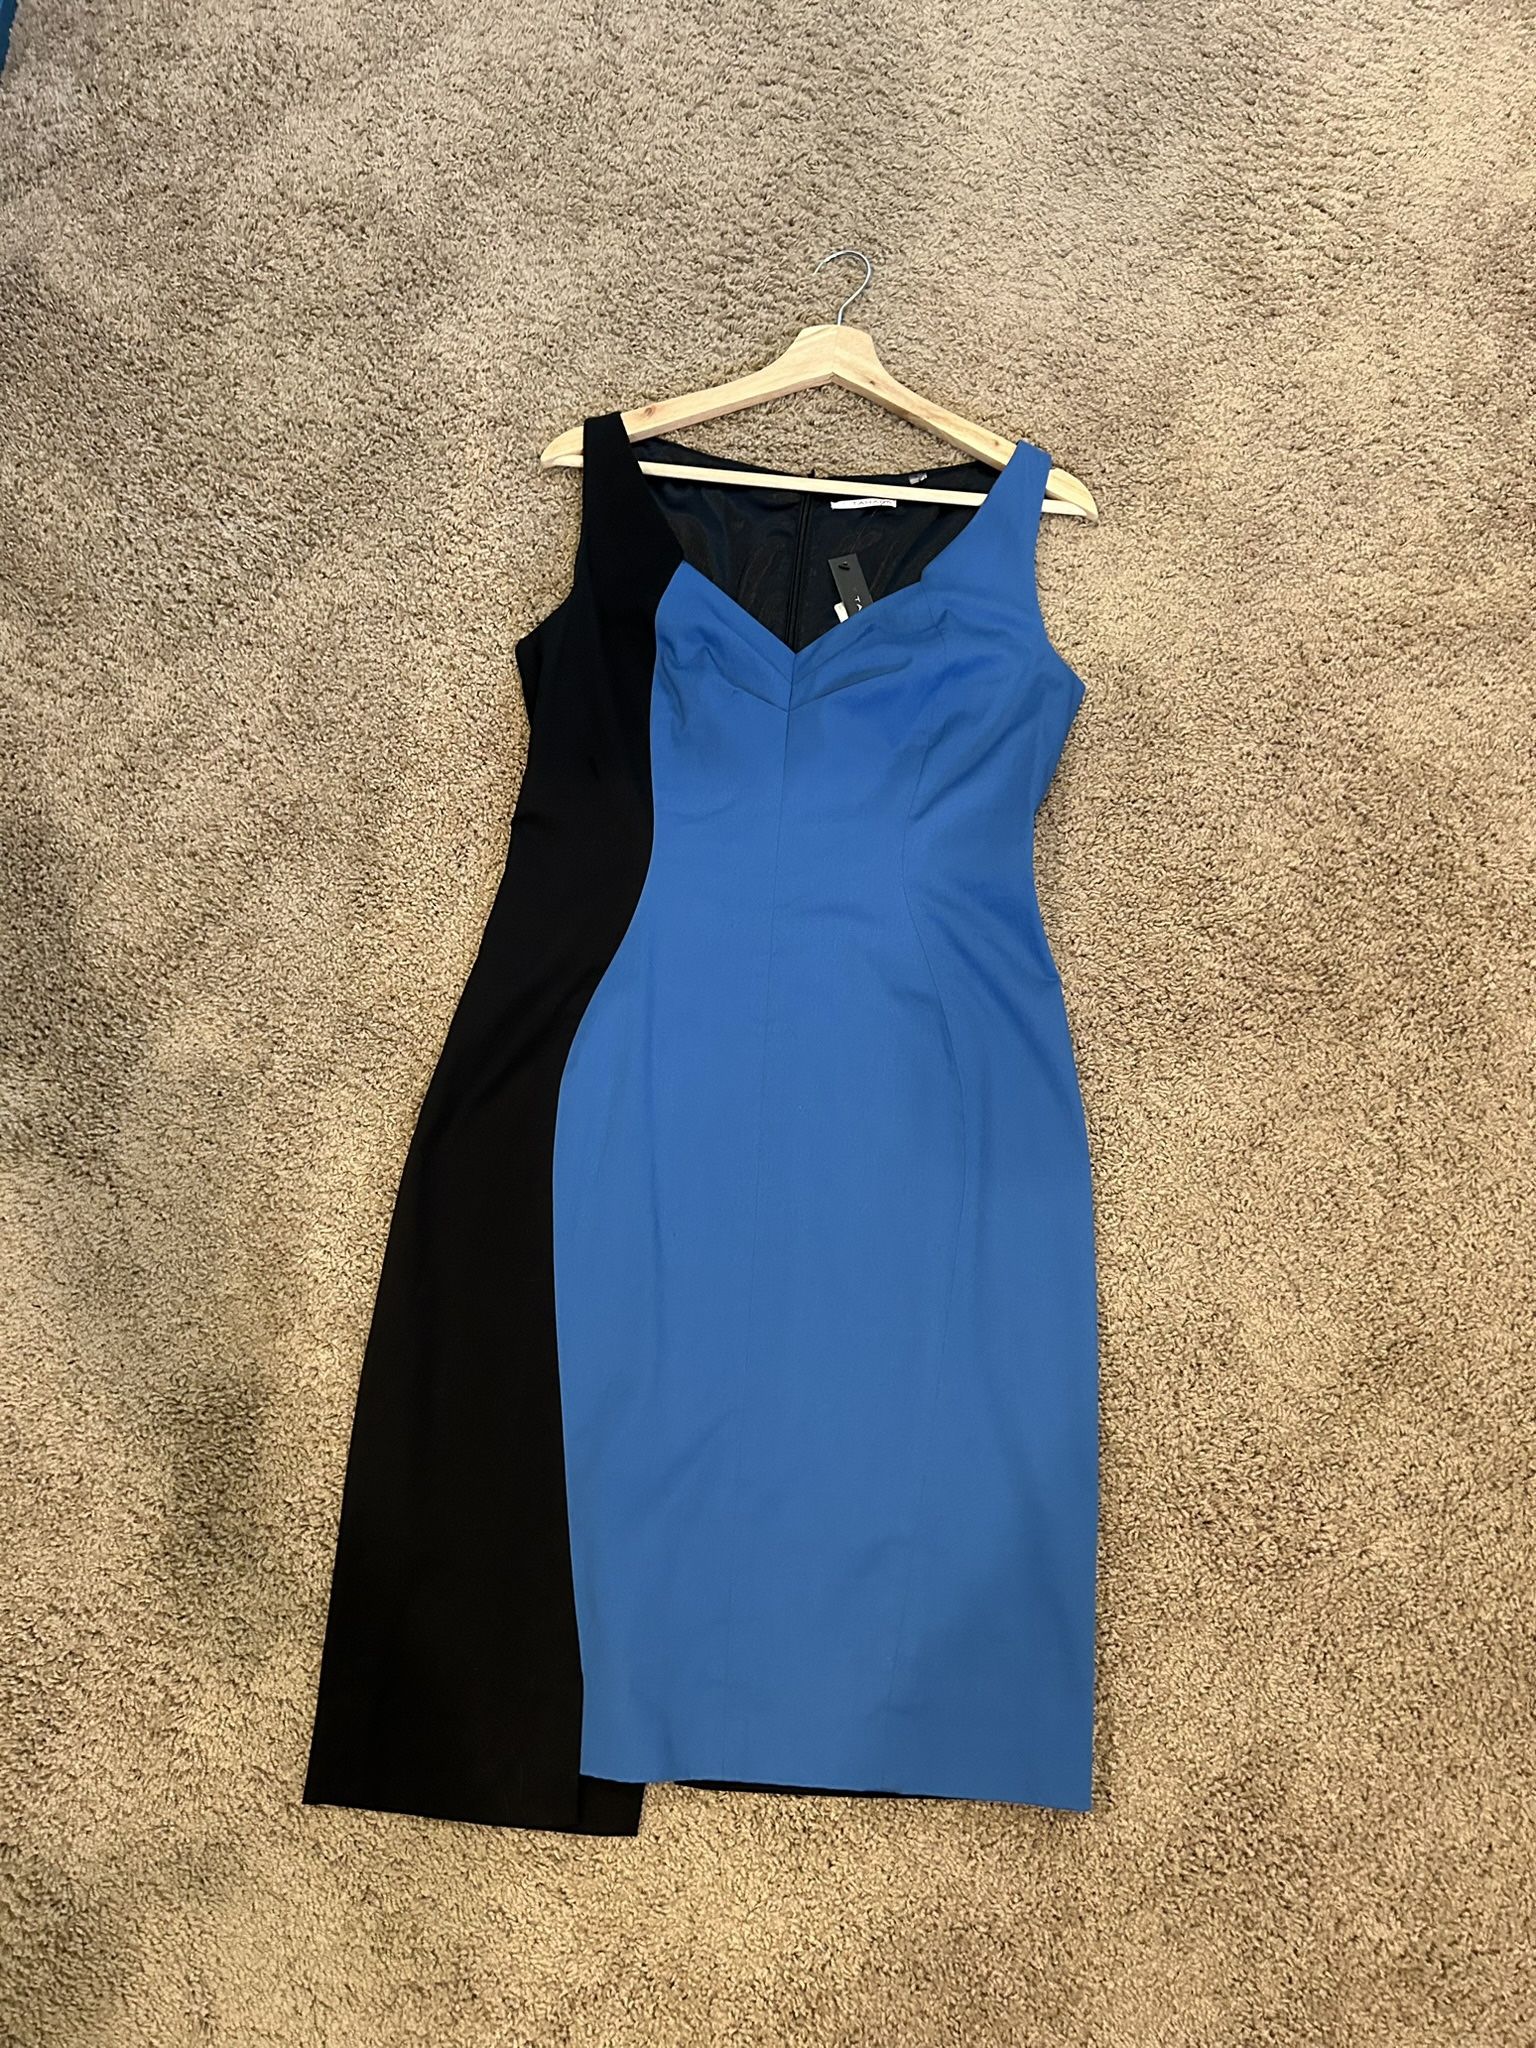 NWT T Tahari, Blue and Black Sleeveless Dress, Size 10